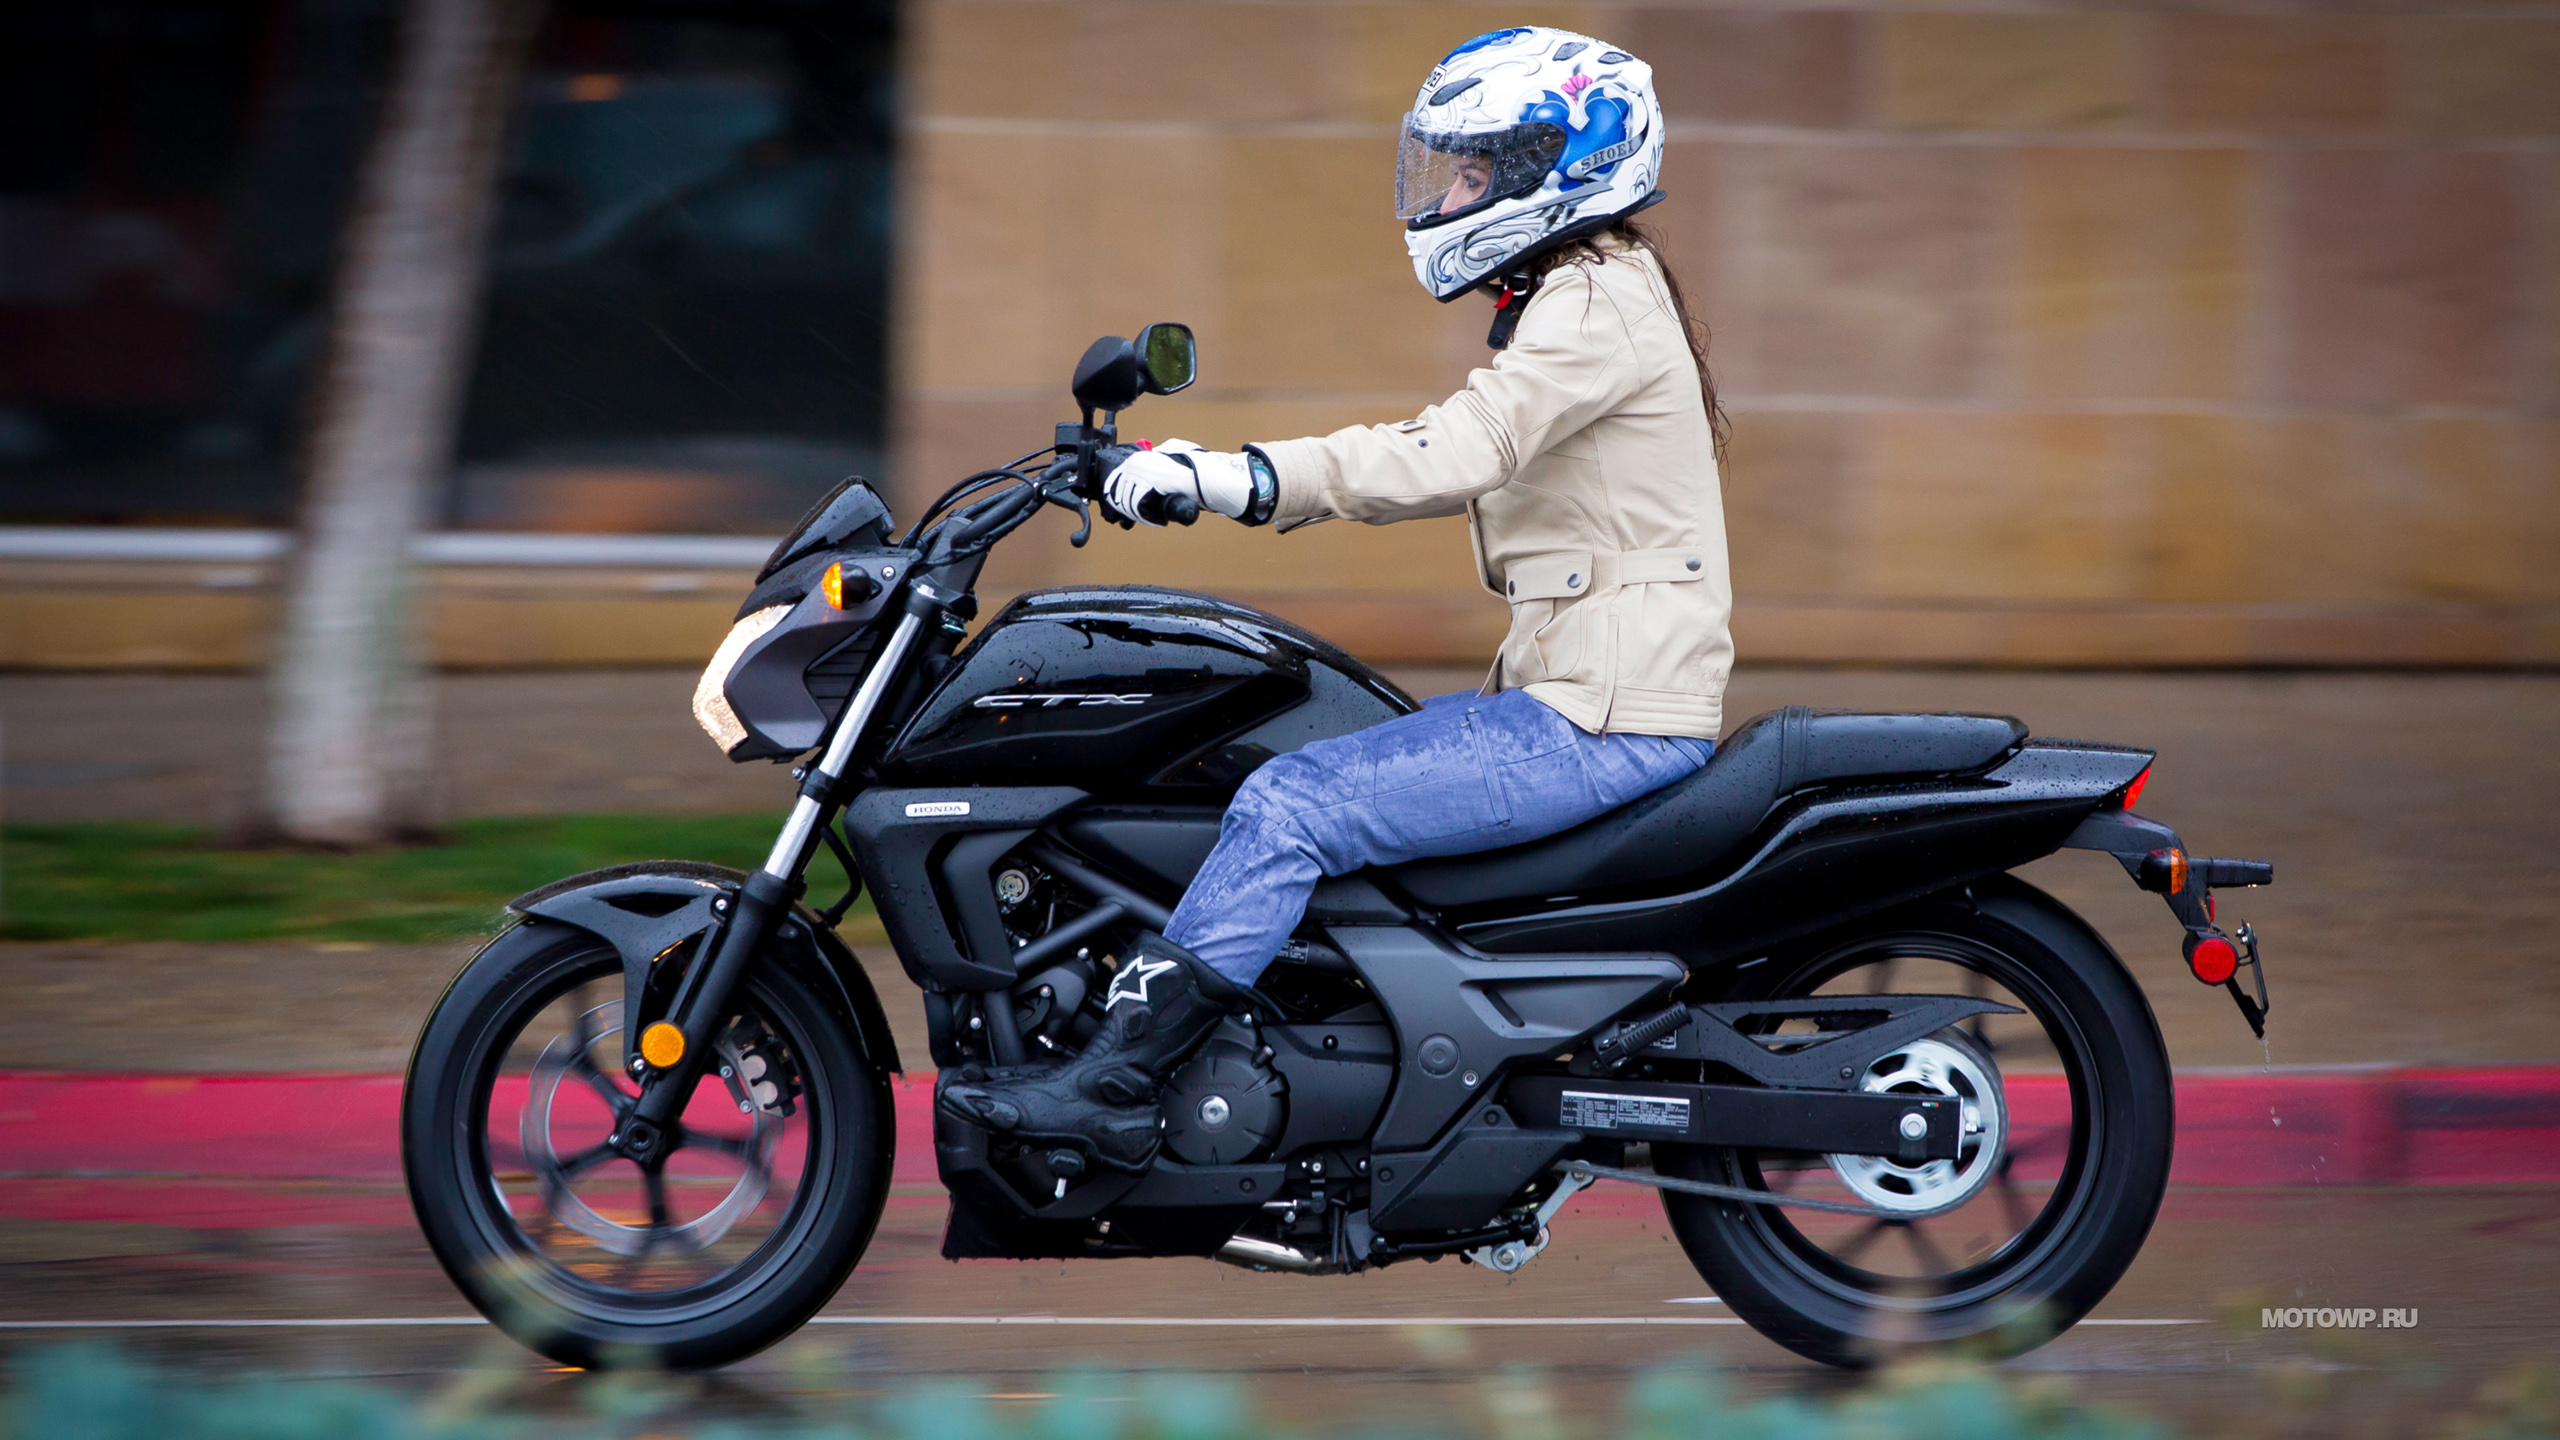 Мотоцикл honda ctx 700n 2014 обзор